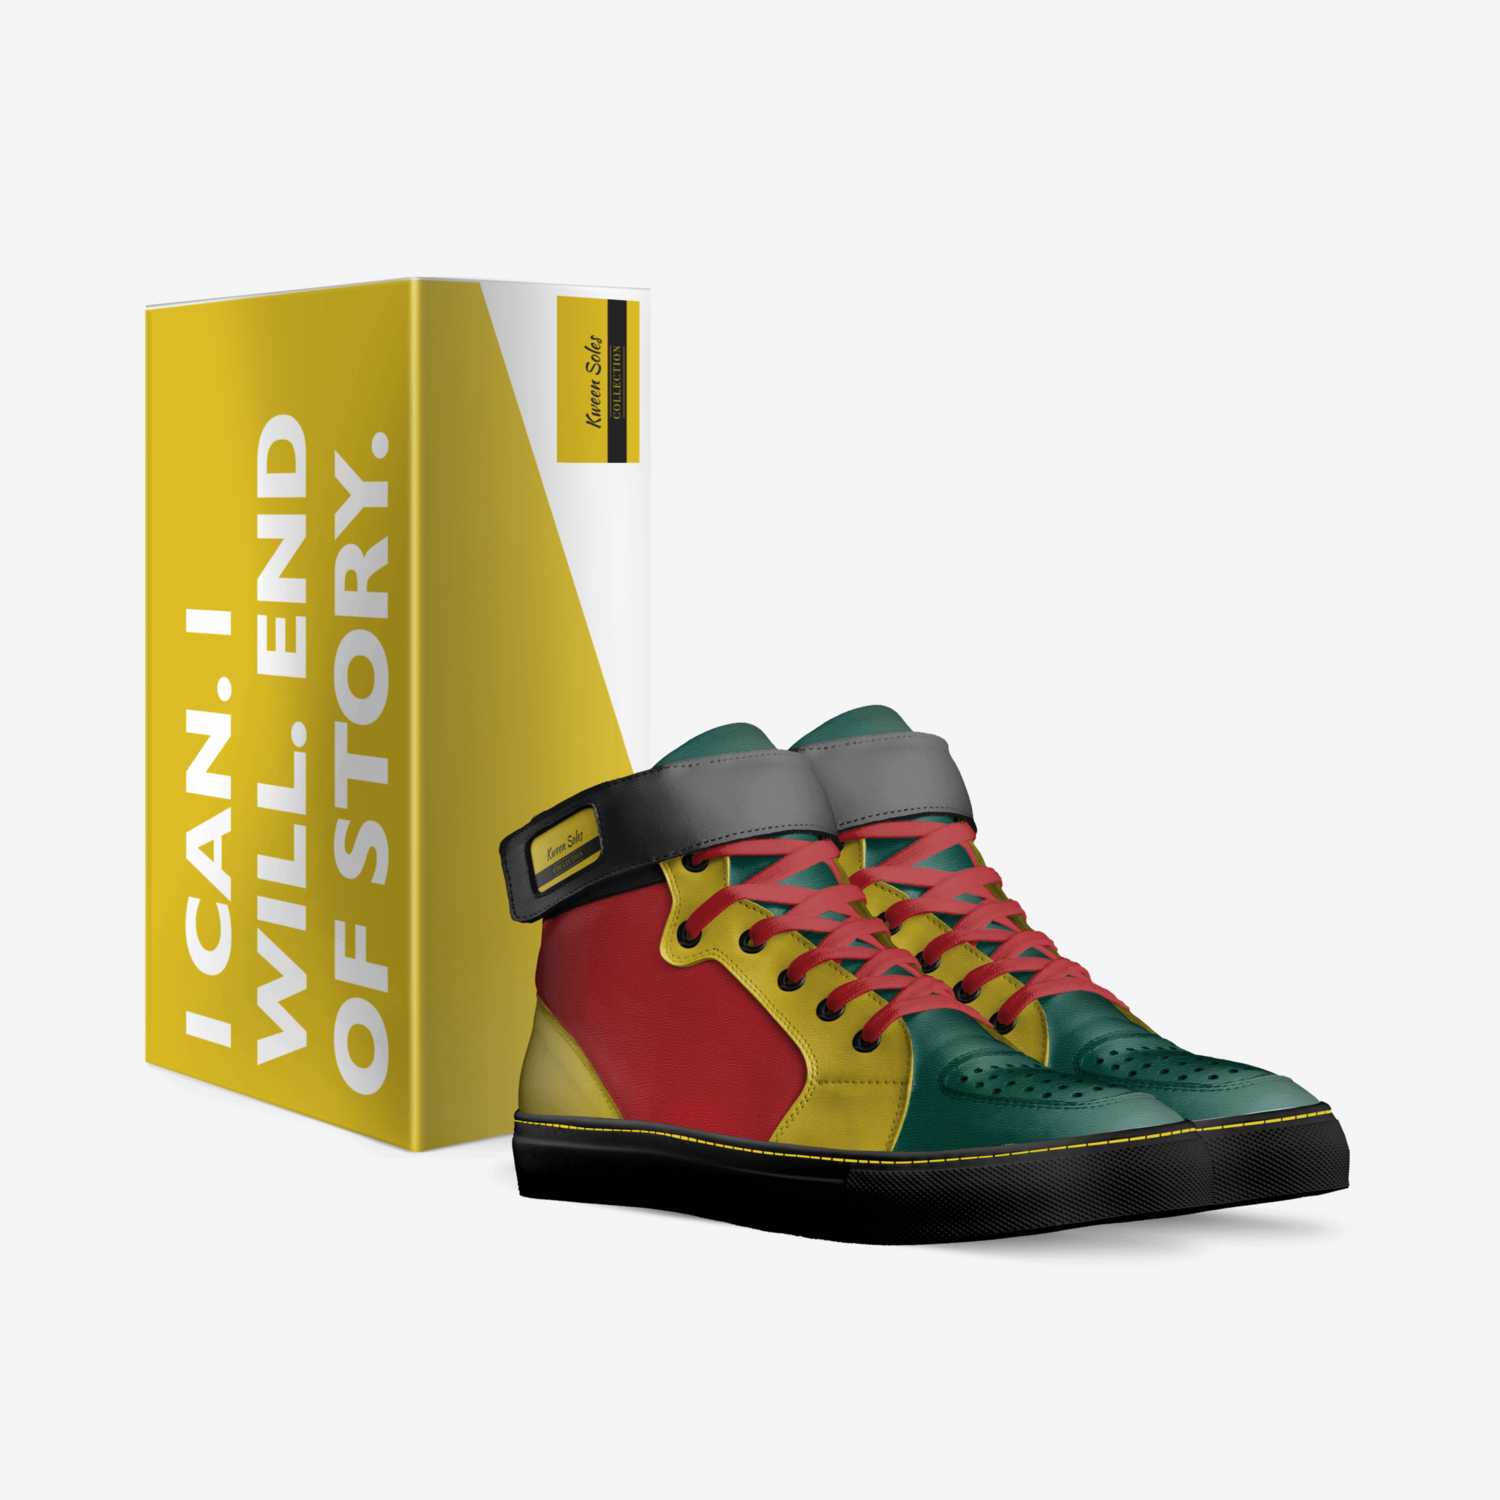 Kween Soles  custom made in Italy shoes by Kween Sankofa-bey | Box view